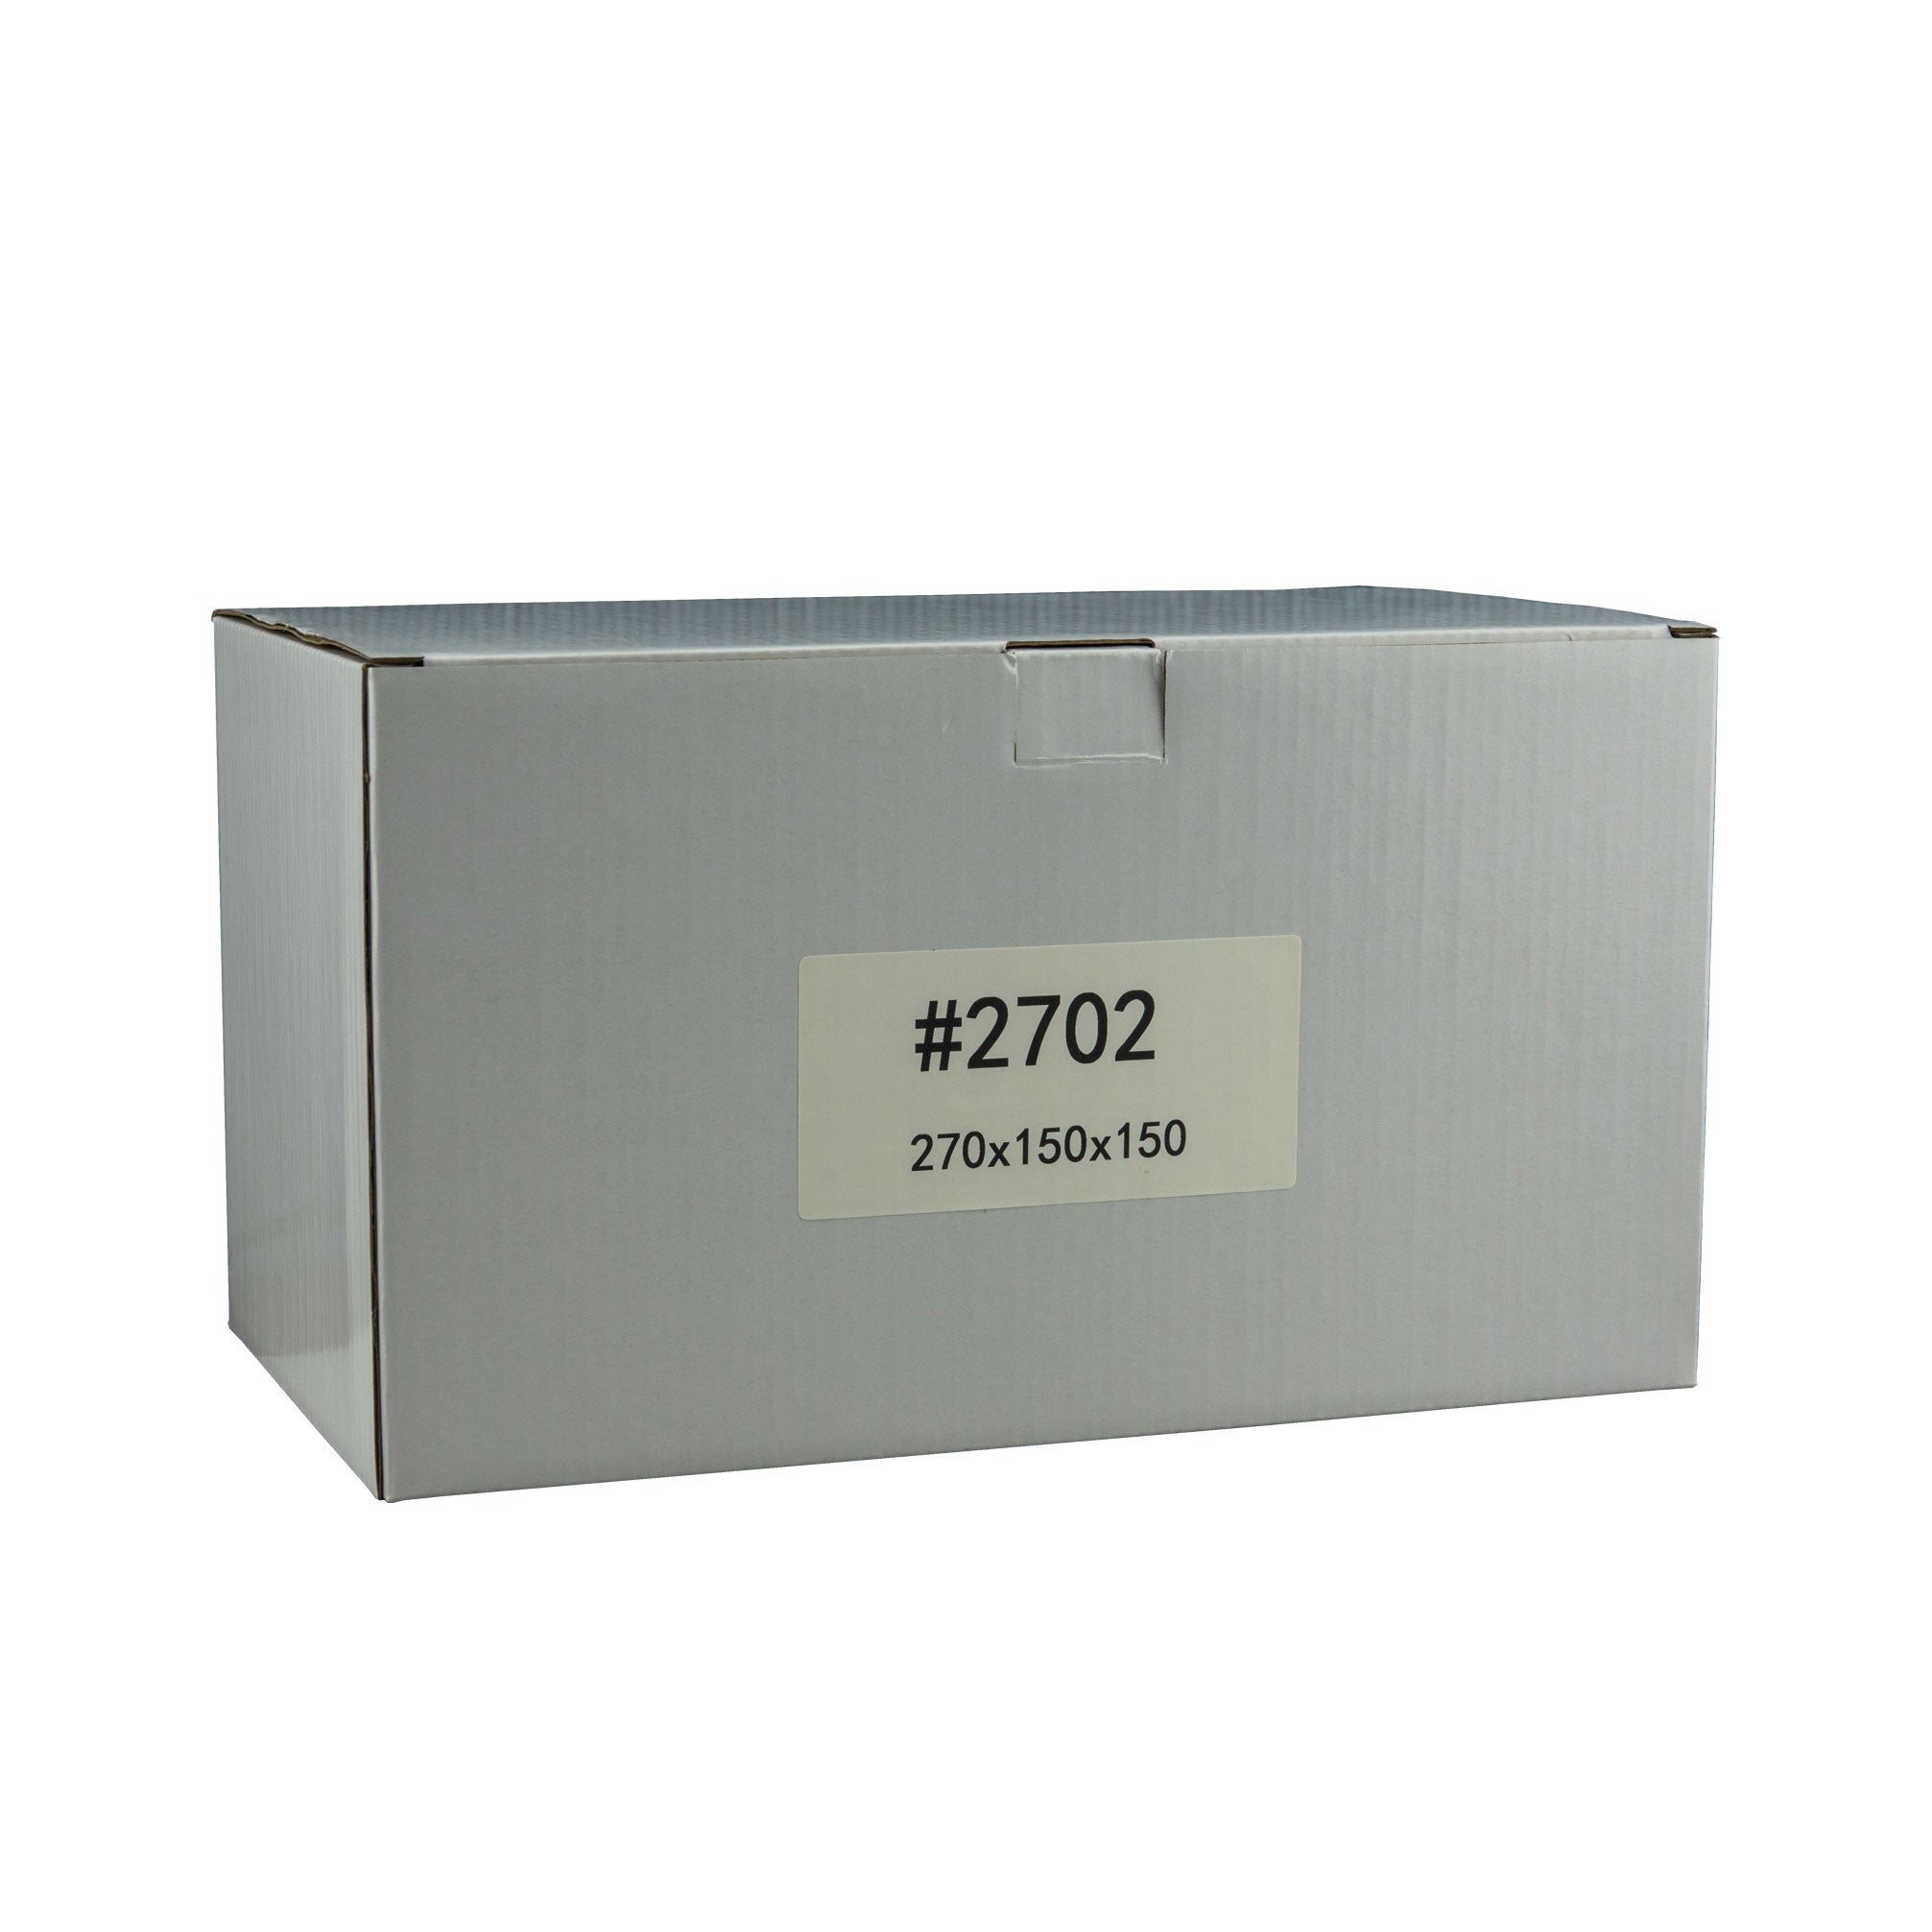 270mm x 150mm x 150mm White Carton Cardboard Shipping Box (#2702)